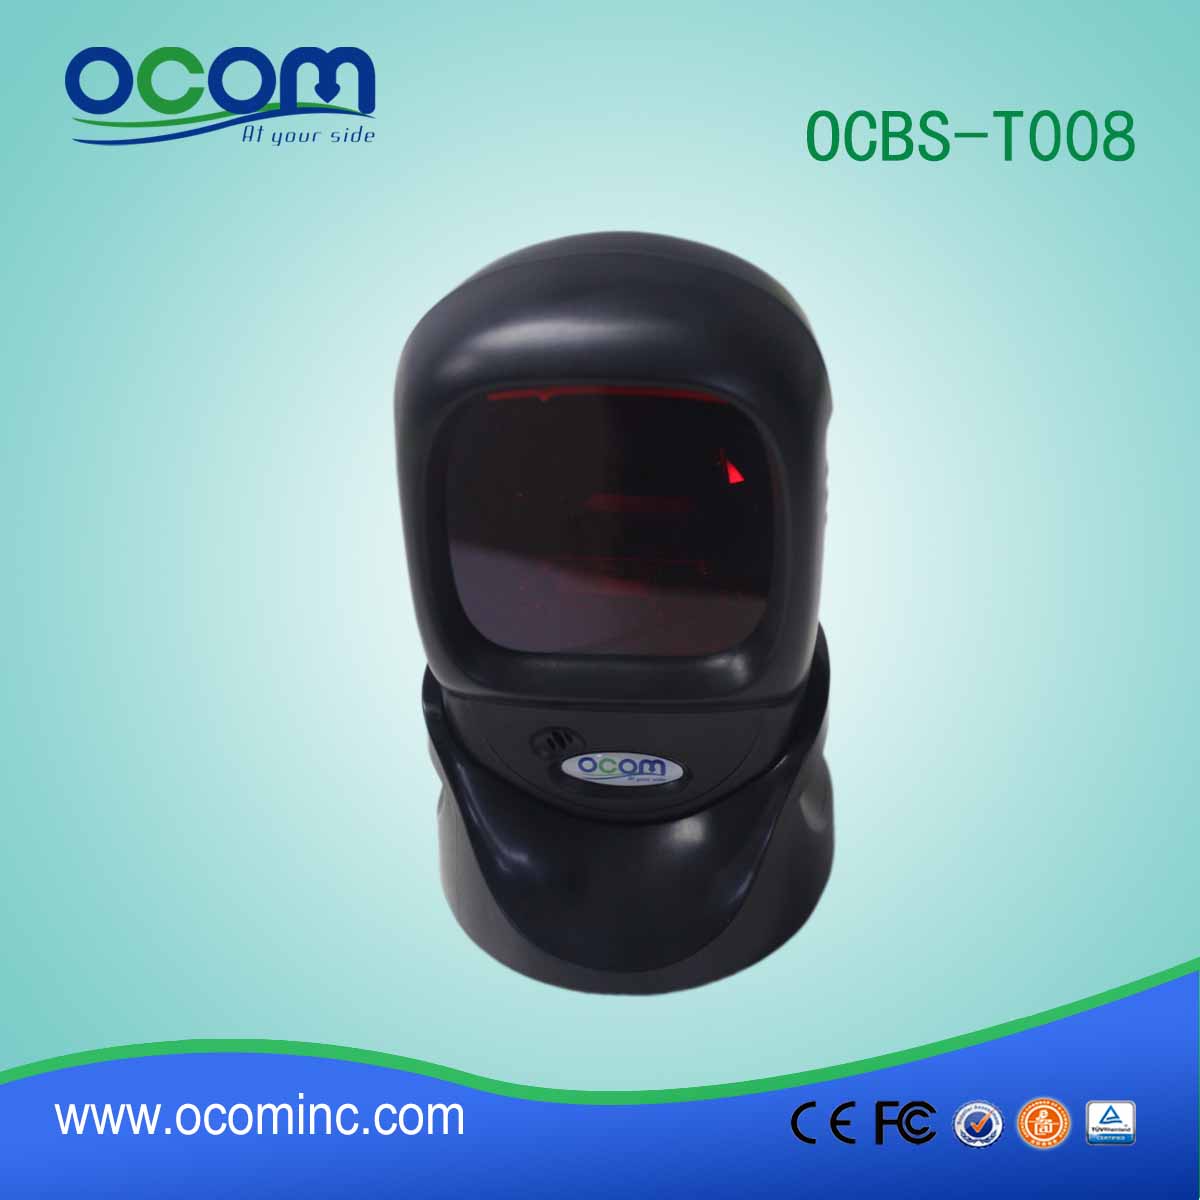 OCBs-T008 Супермаркет OMINI кассовый аппарат Штрих POS сканер